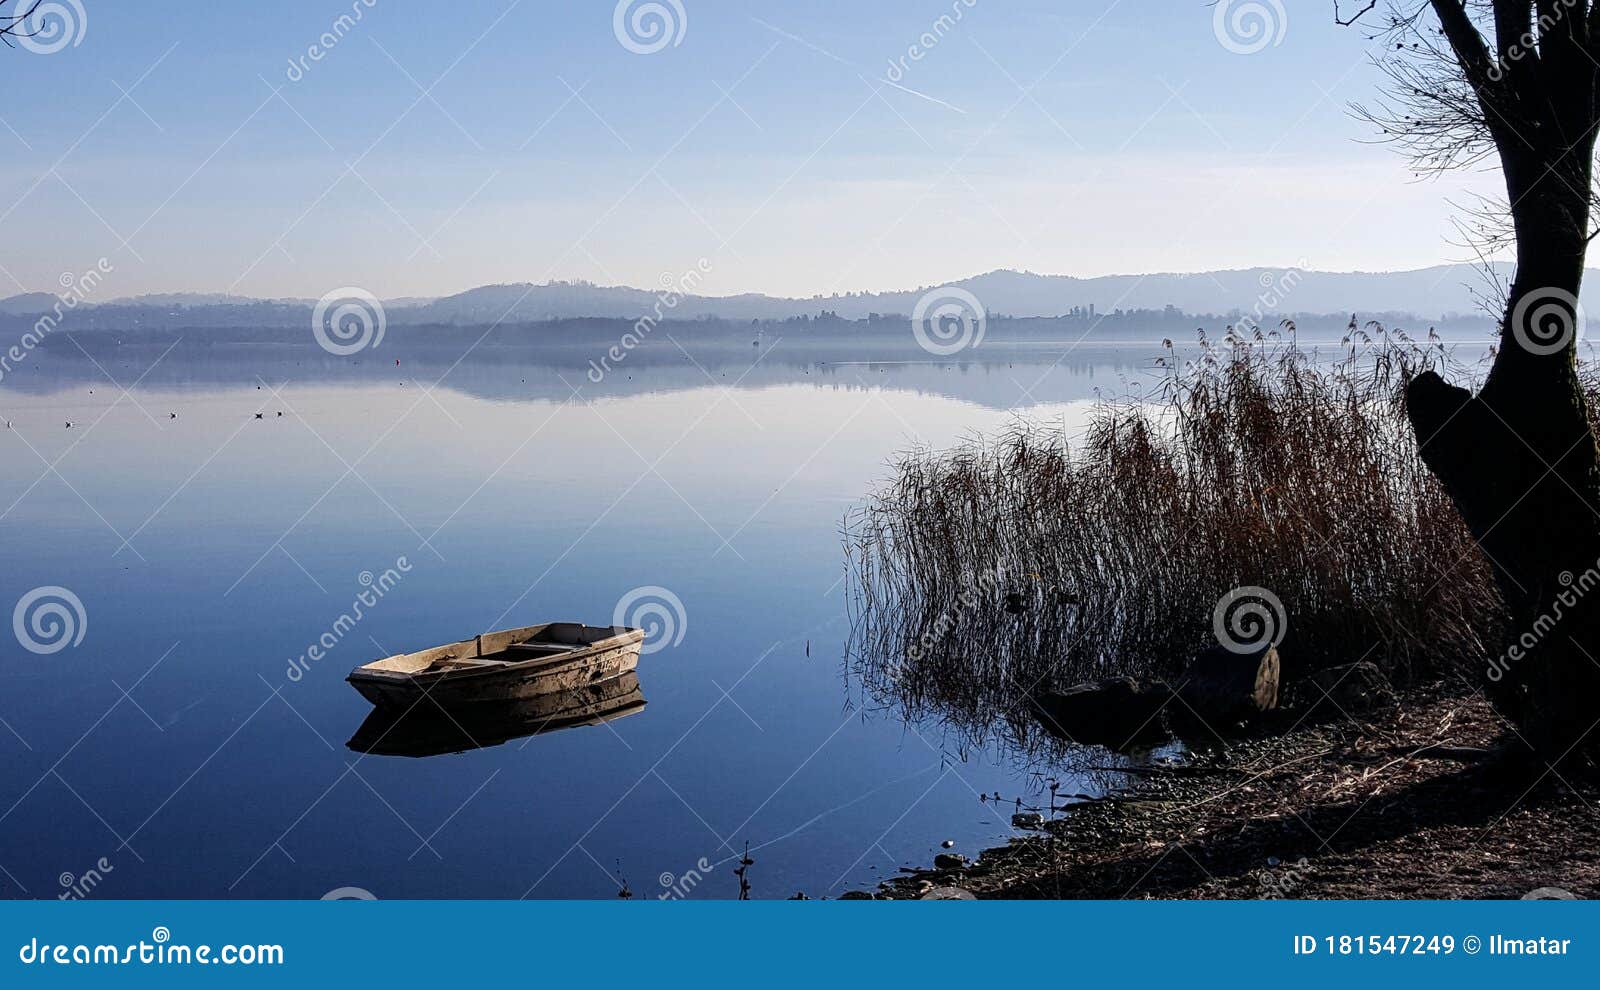 boat on the lago di varese